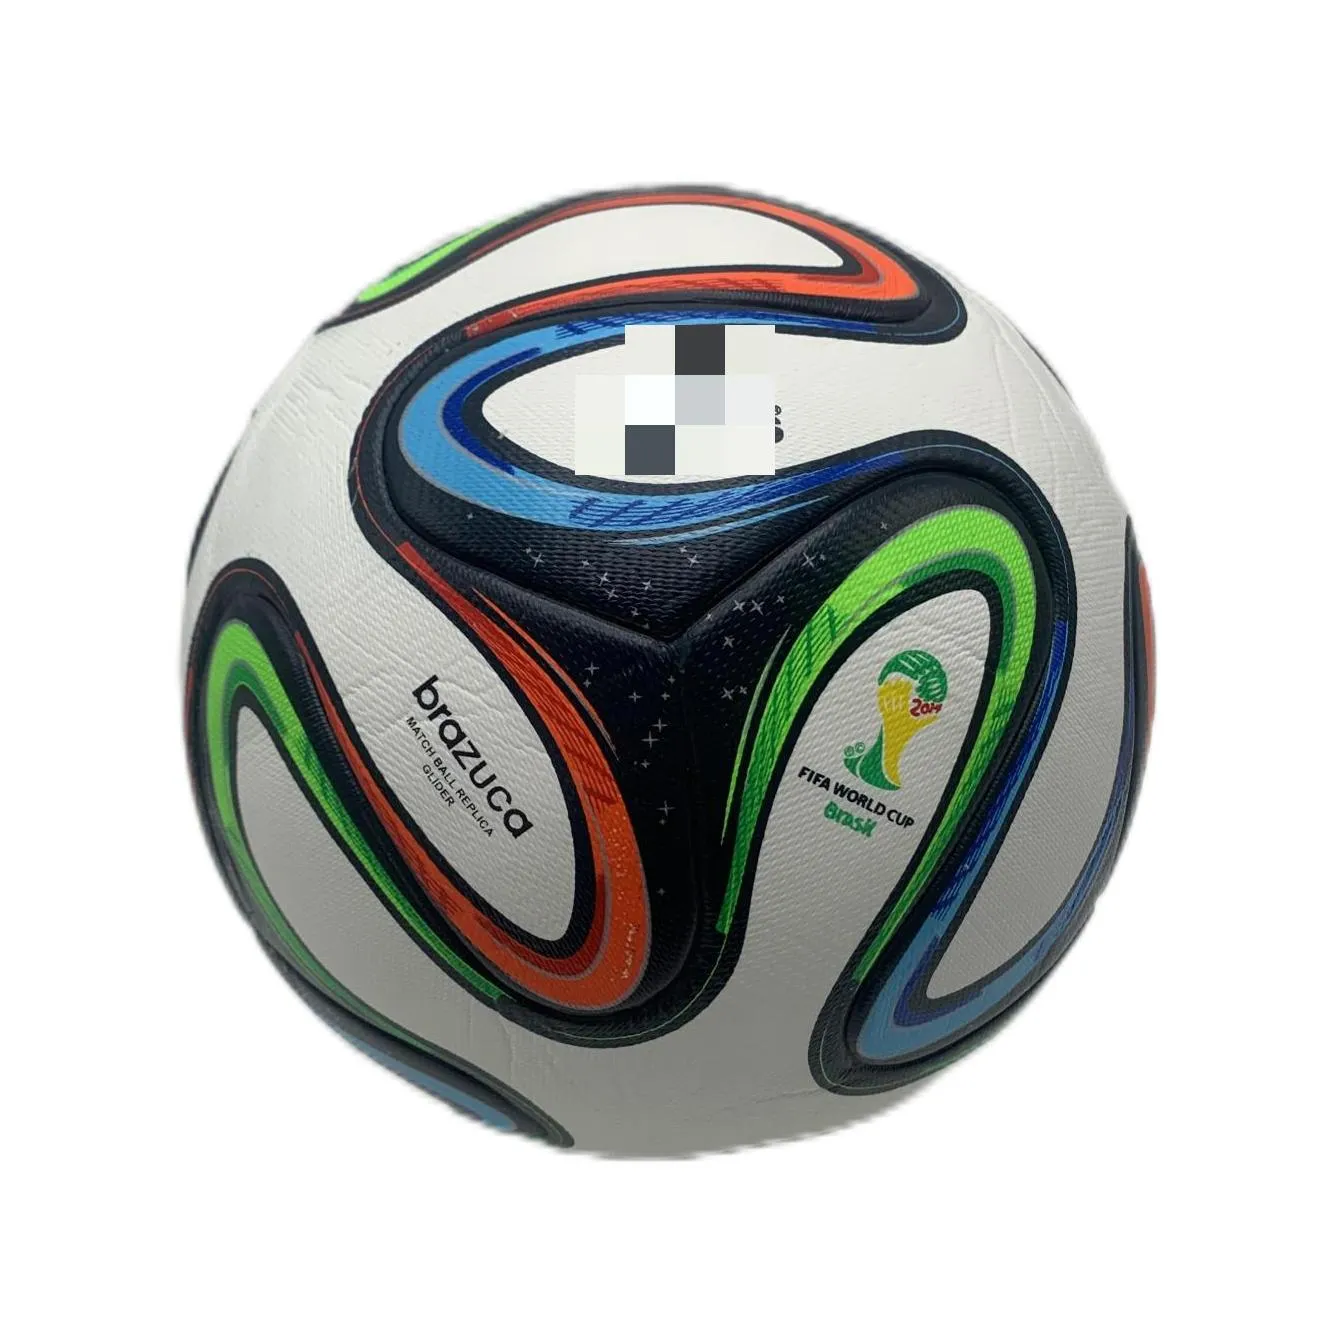 2022 Qatar World Authentic Womens Euro Football Ball Size 5, Veneer  Material, Wholesale Featuring Al Hilm, Al Rihla, Jabulani, Brazuca From  Lhf15059946981, $12.81